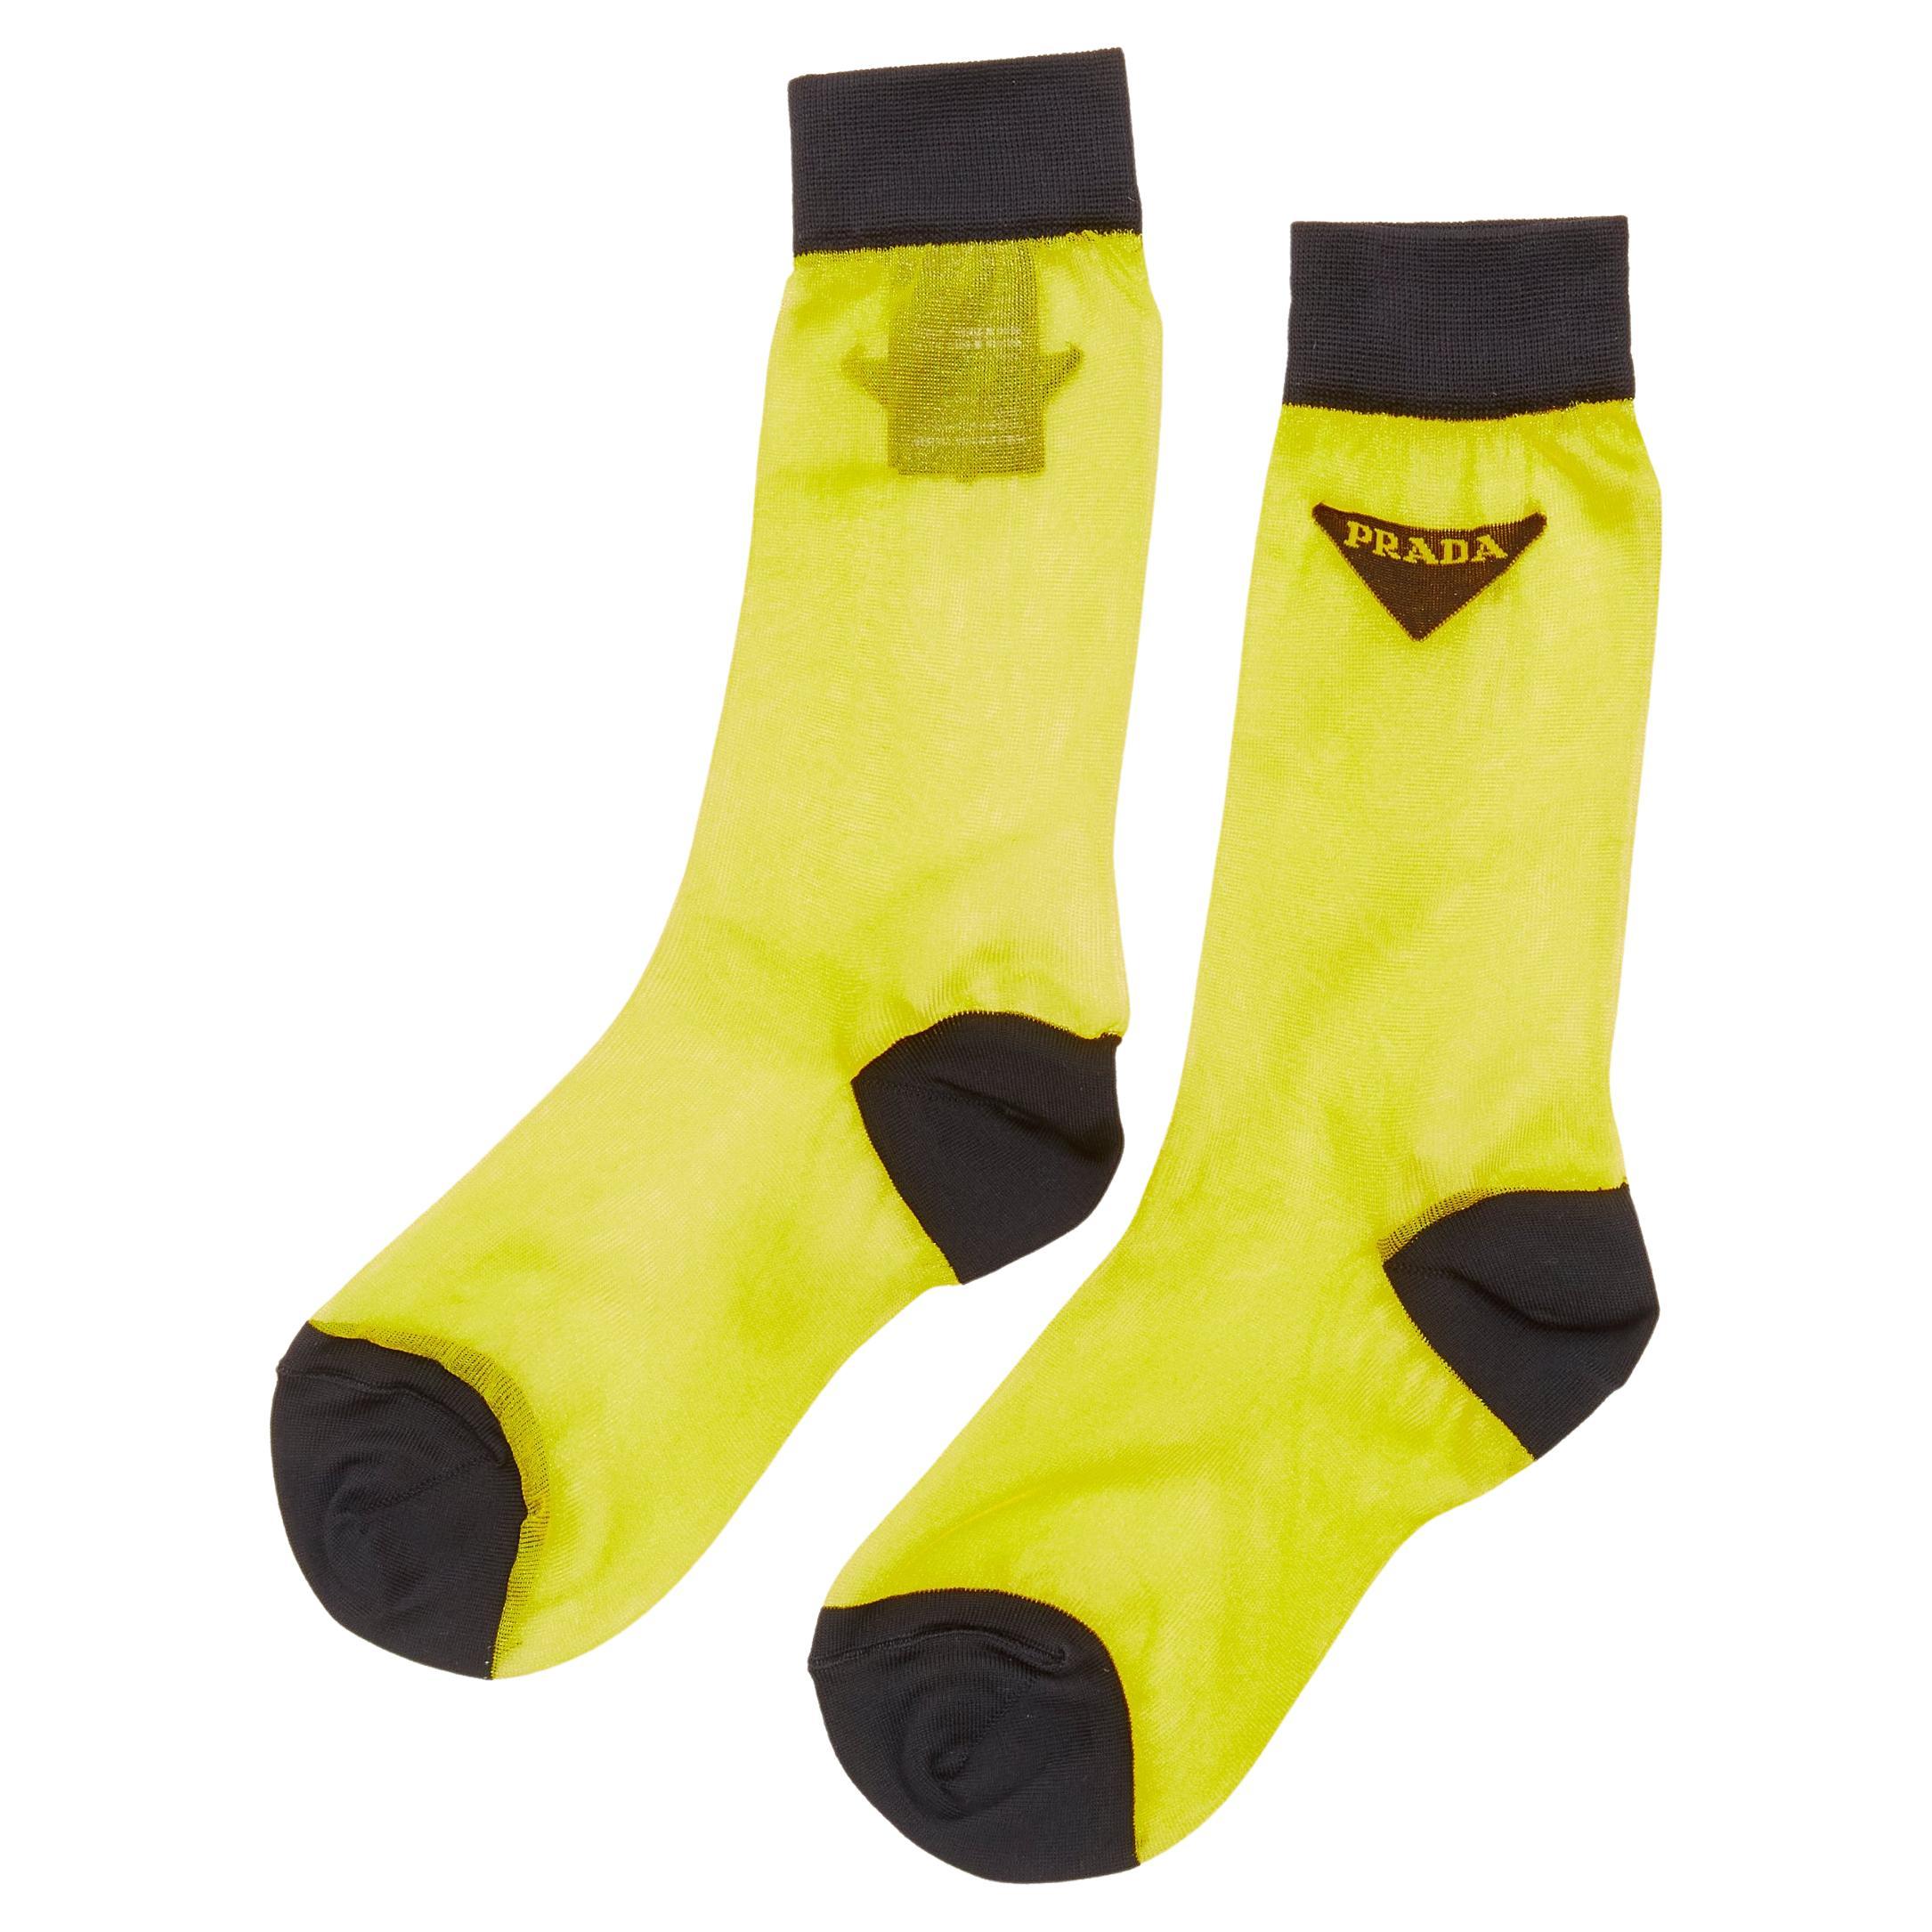 new PRADA Triangle logo yellow semi sheer black trimmed fine cotton knit socks